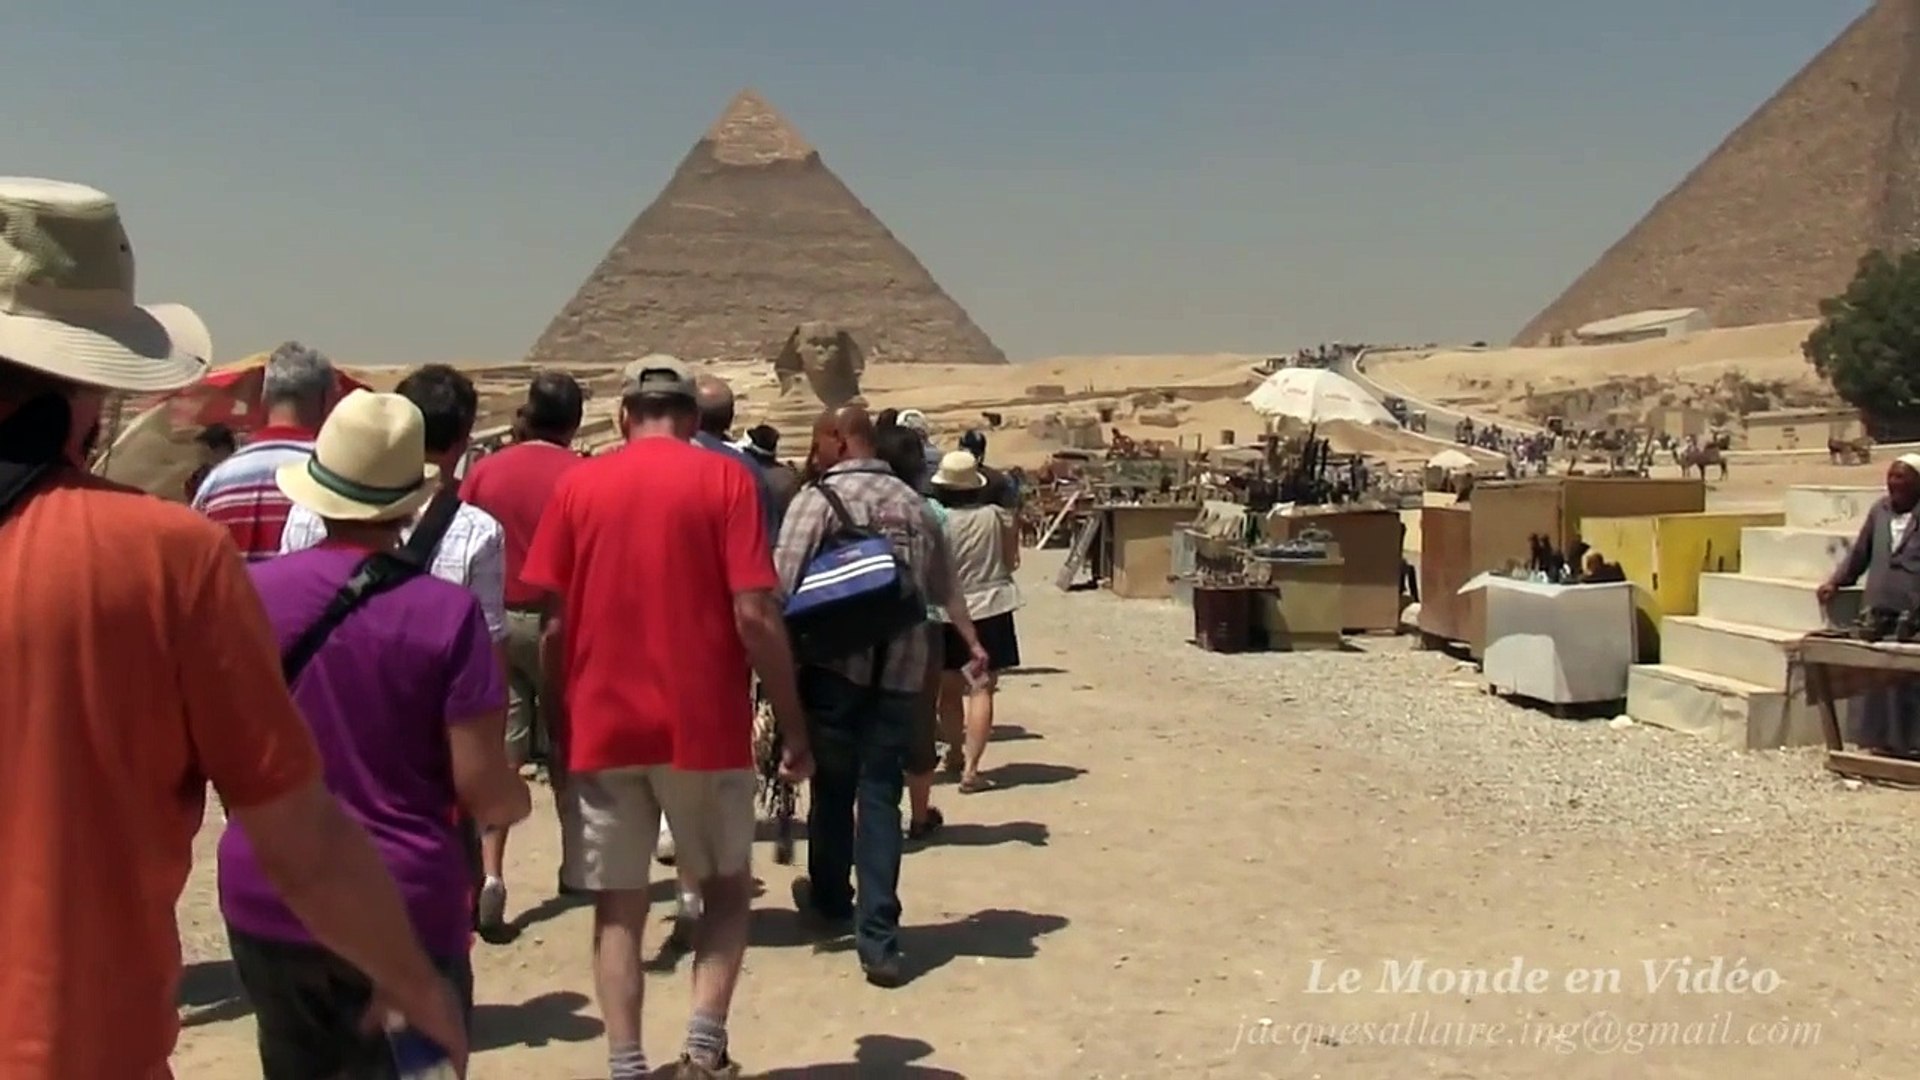 Les pyramides de Giseh